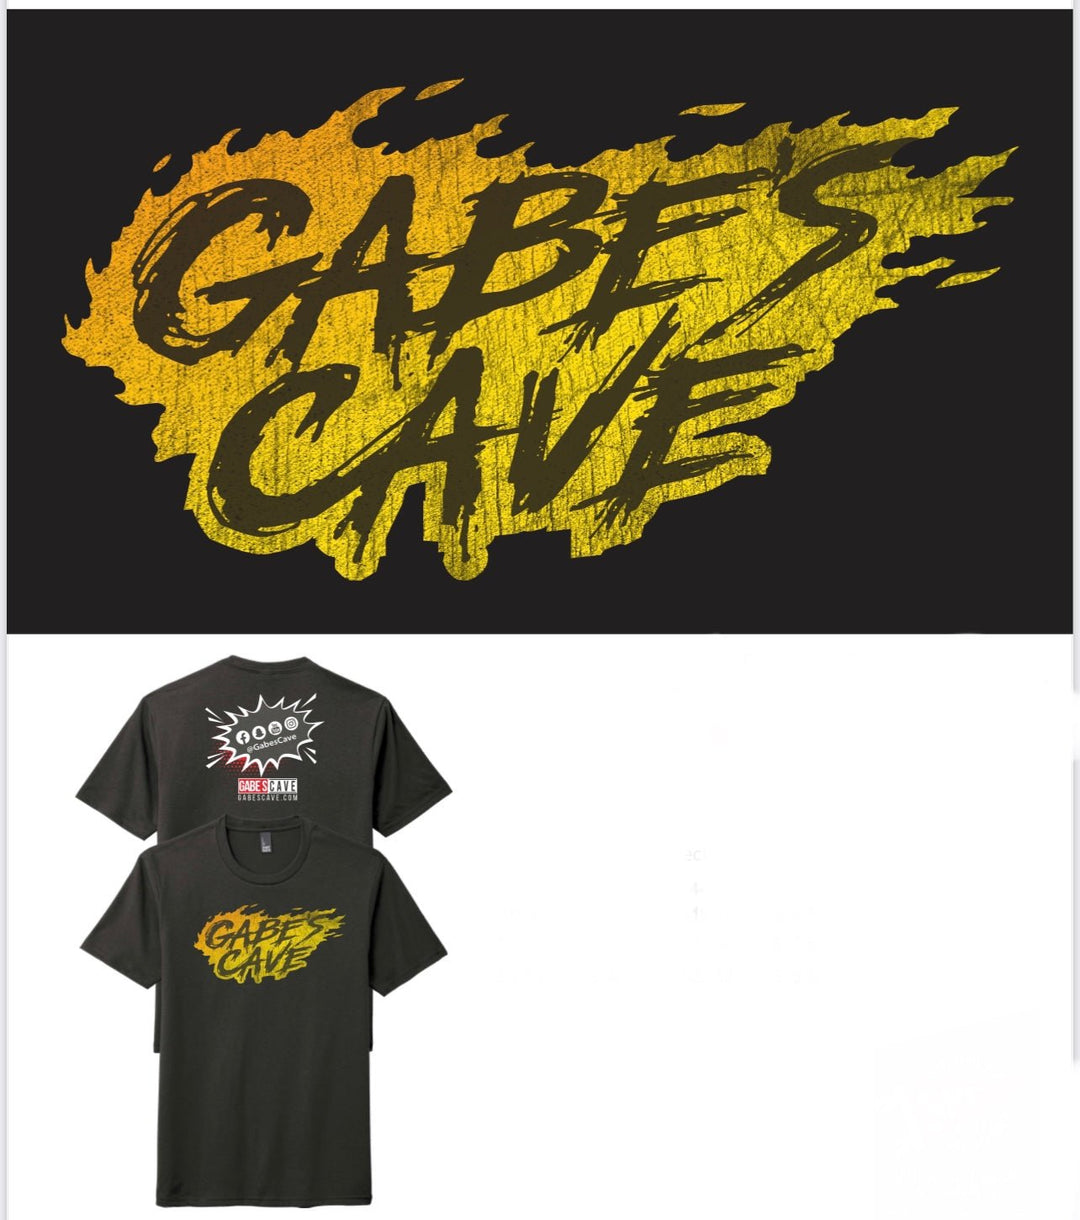 Fired Up Gabe's Cave Logo Shirt - gabescaveccc